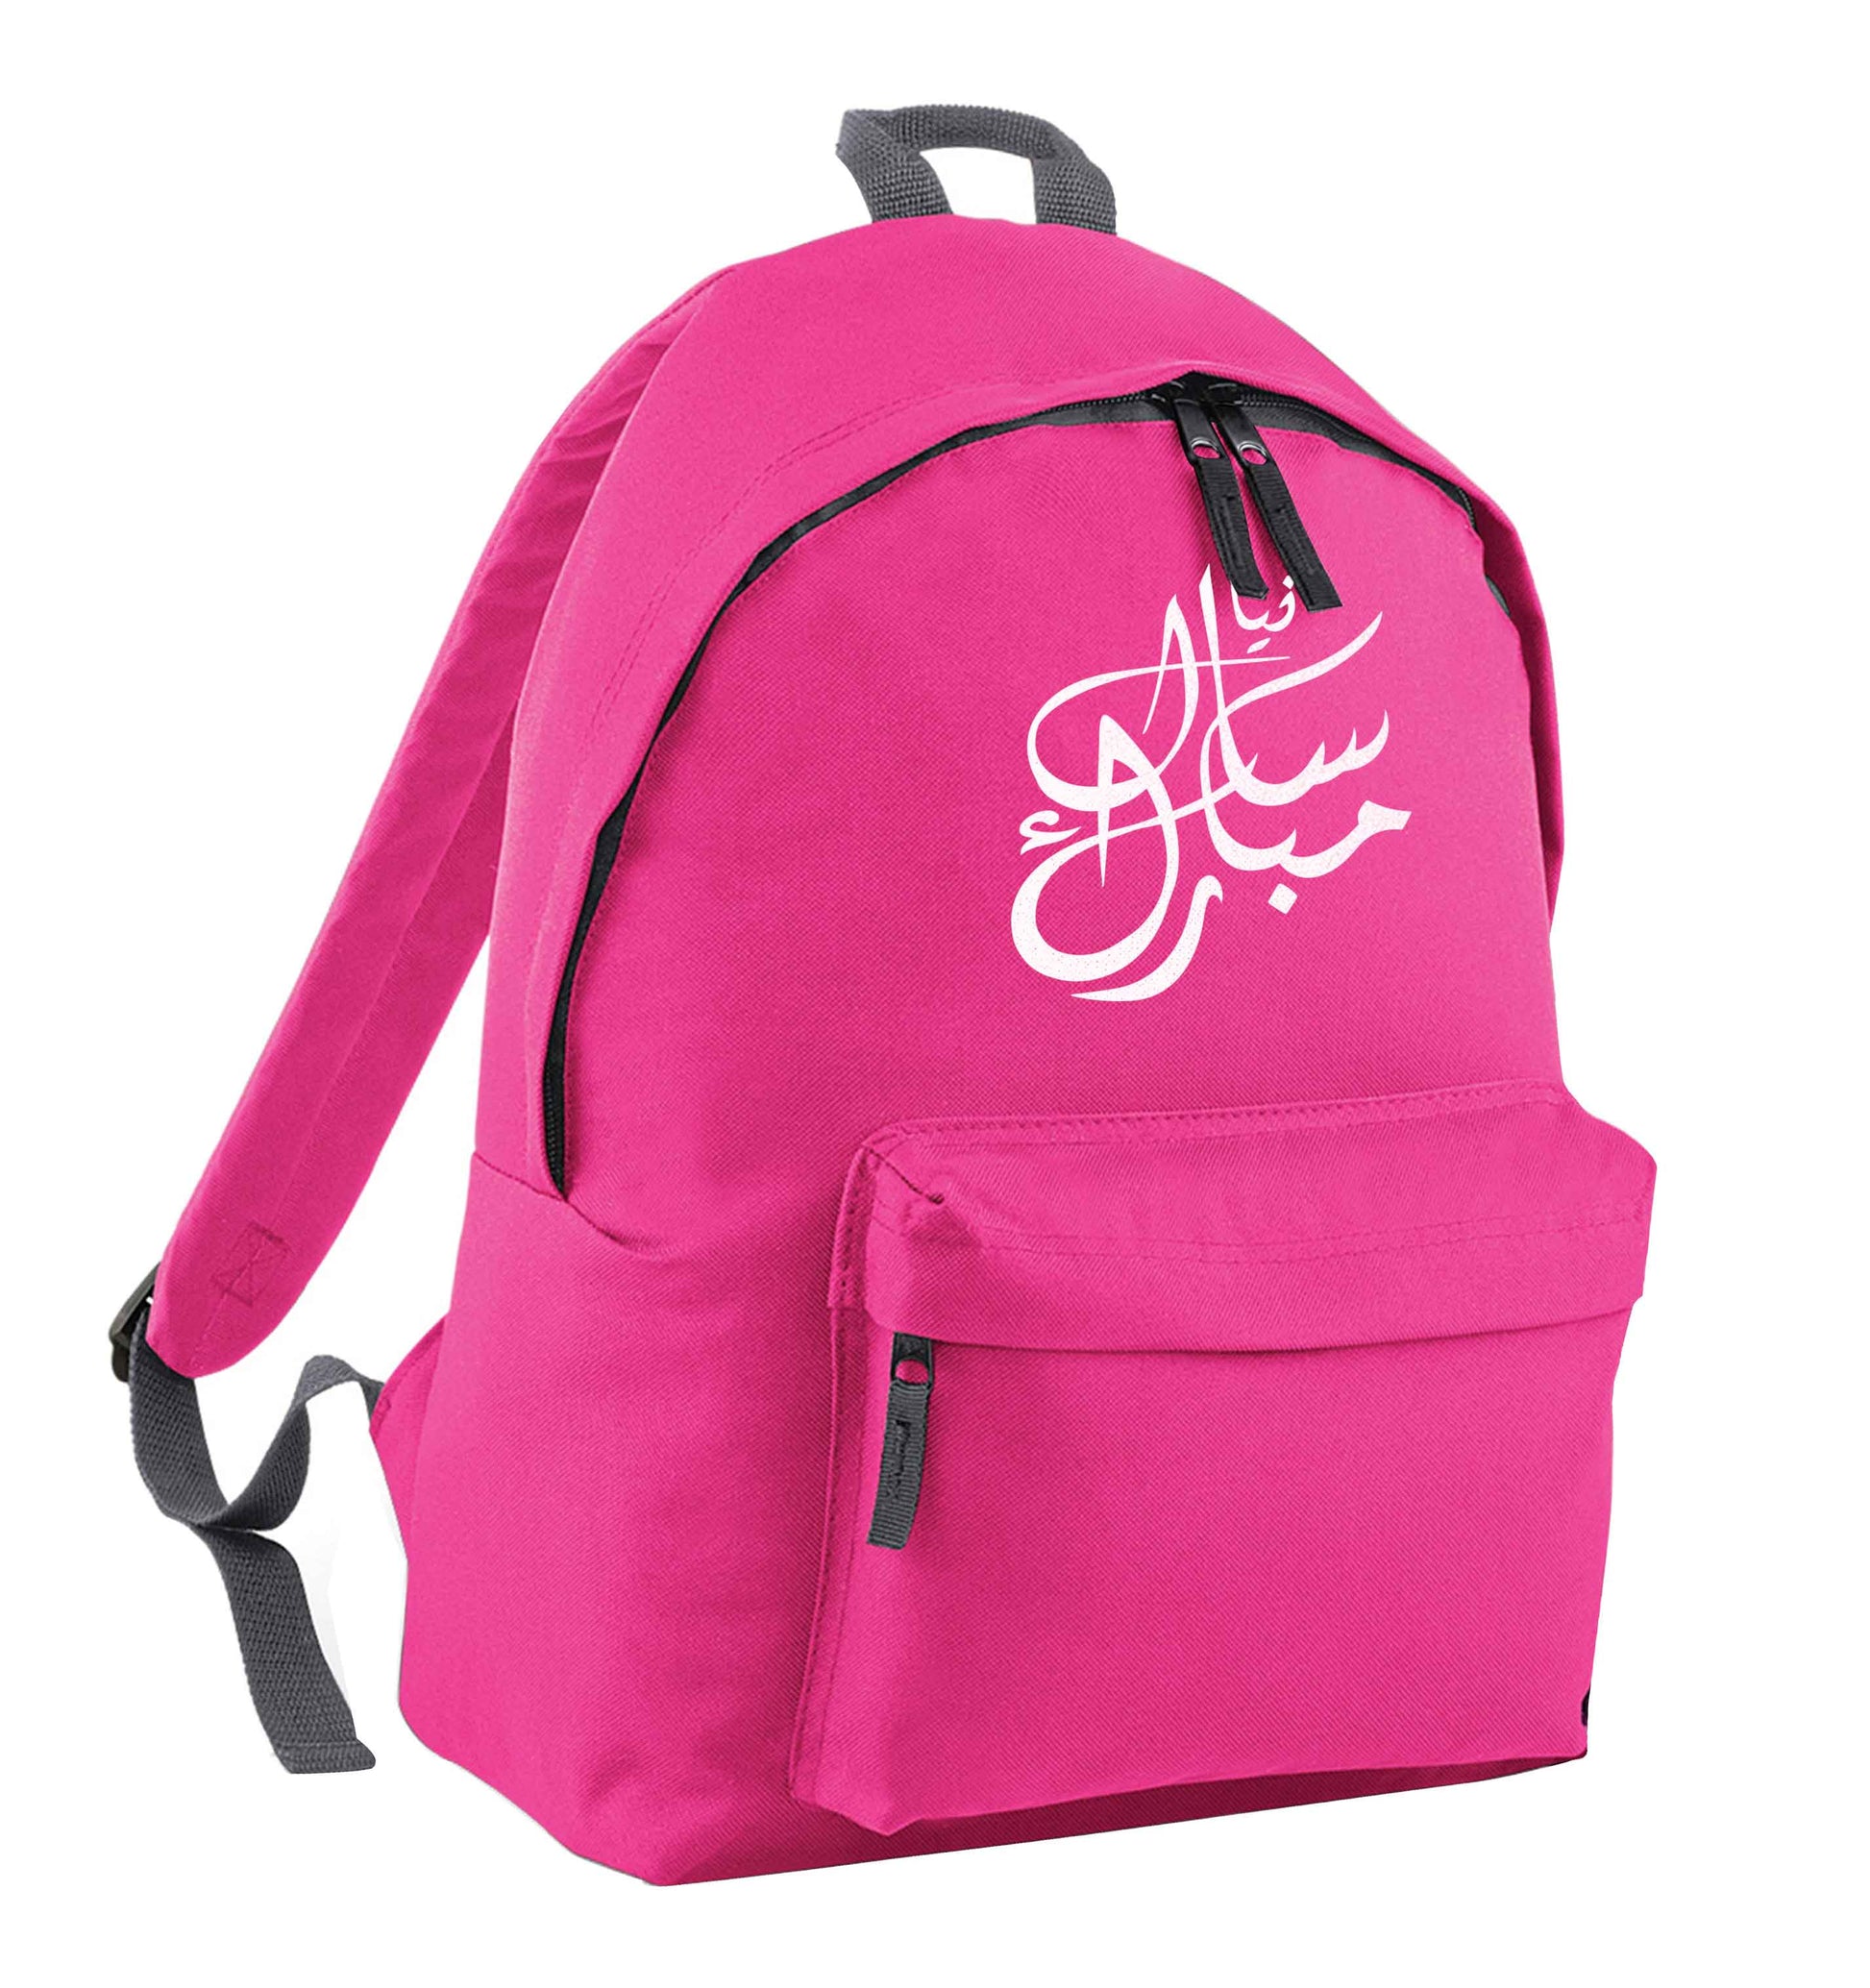 Urdu Naya saal mubarak pink adults backpack